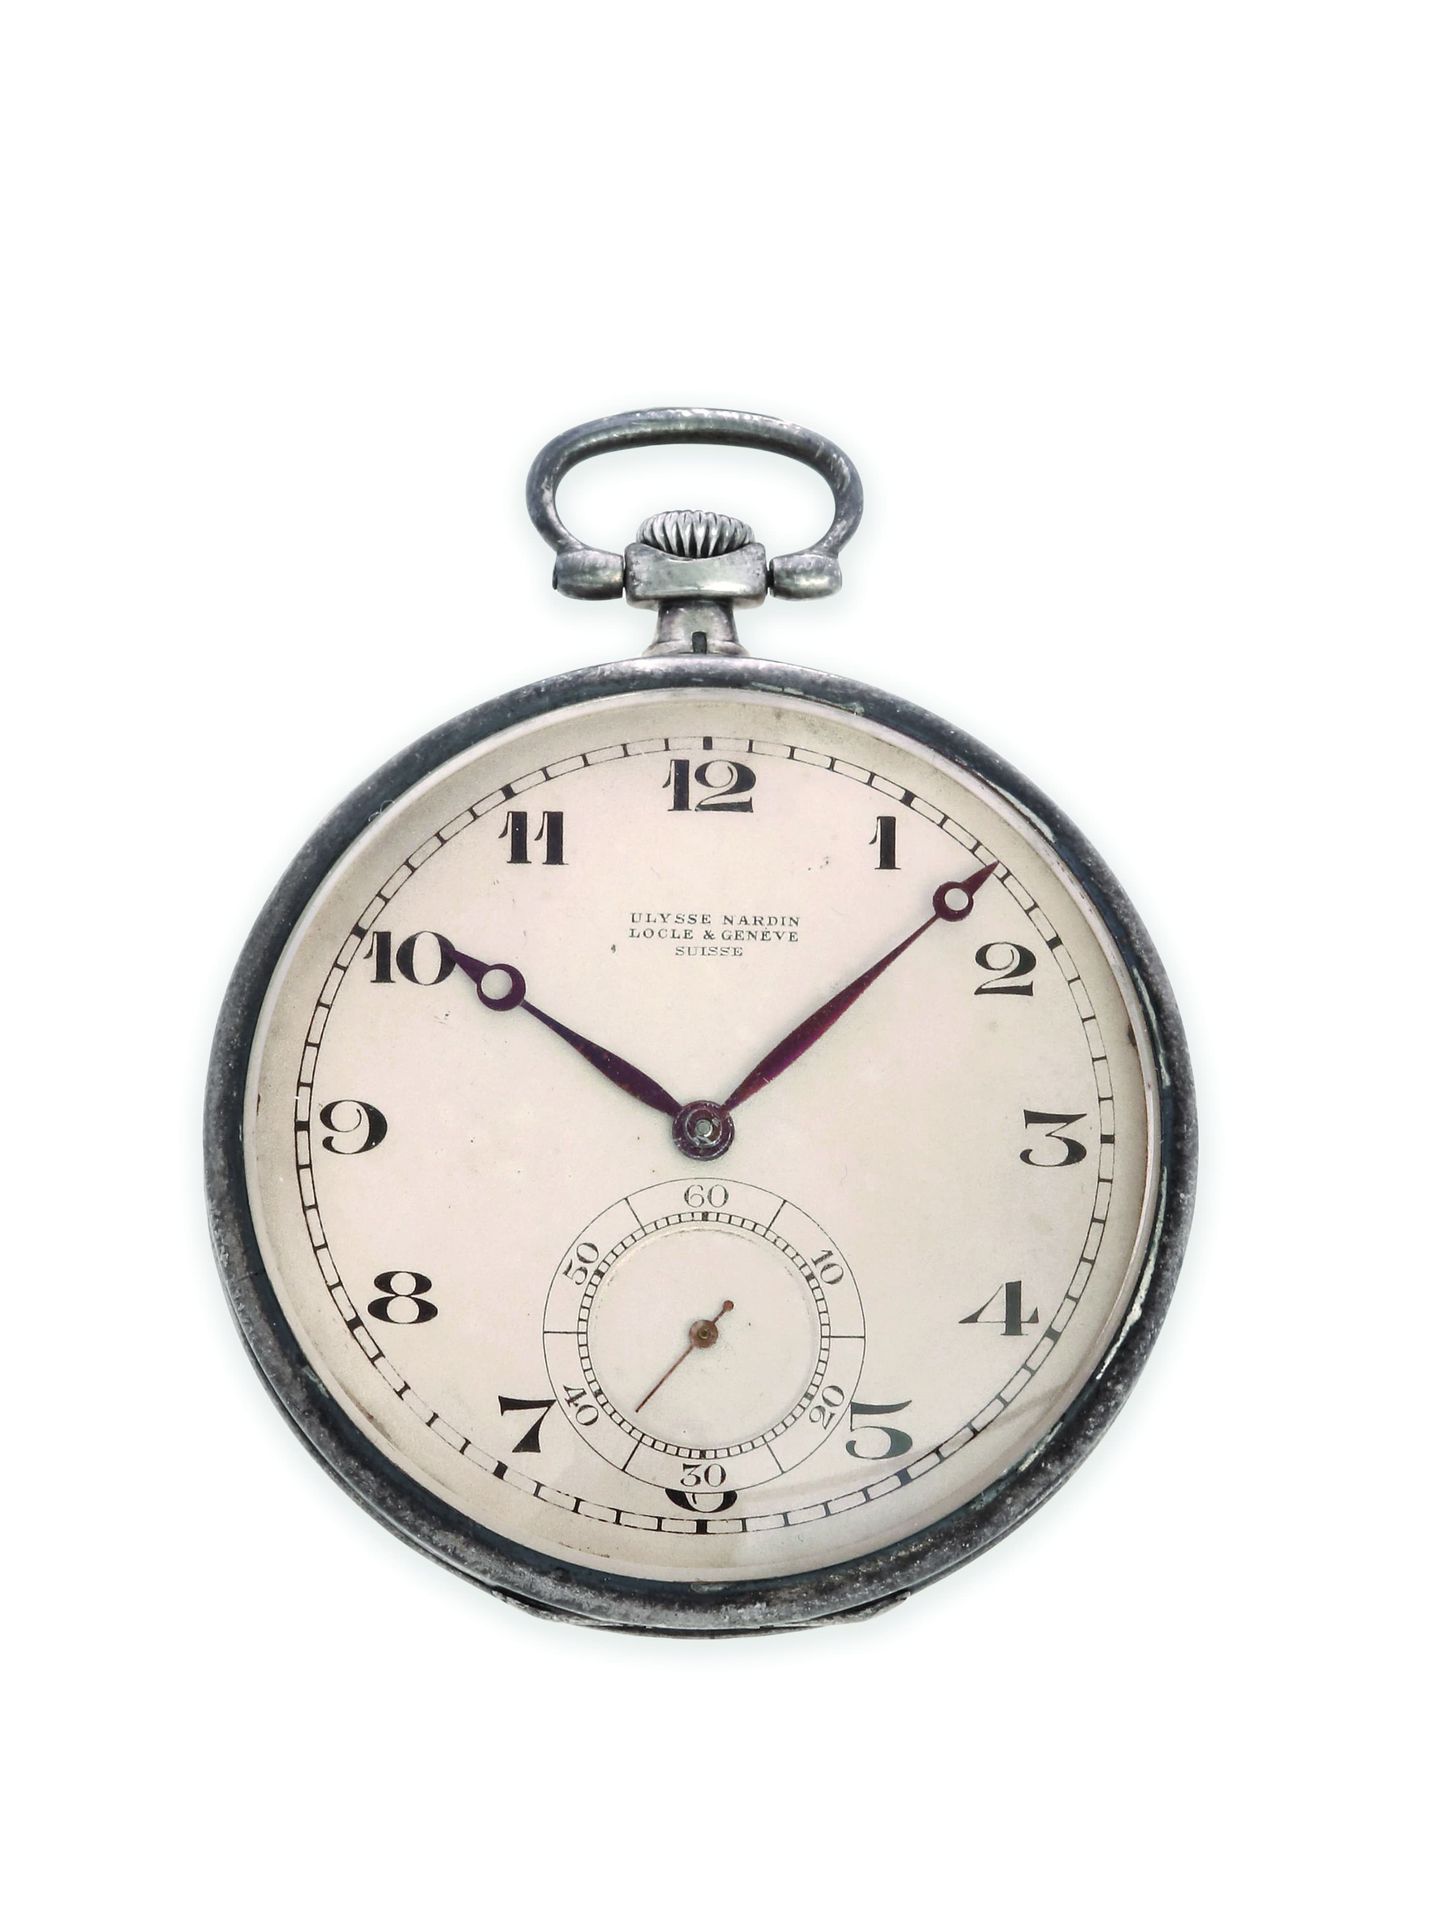 ULYSSE NARDIN Classic
900 thousandths silver pocket watch with mechanical moveme&hellip;